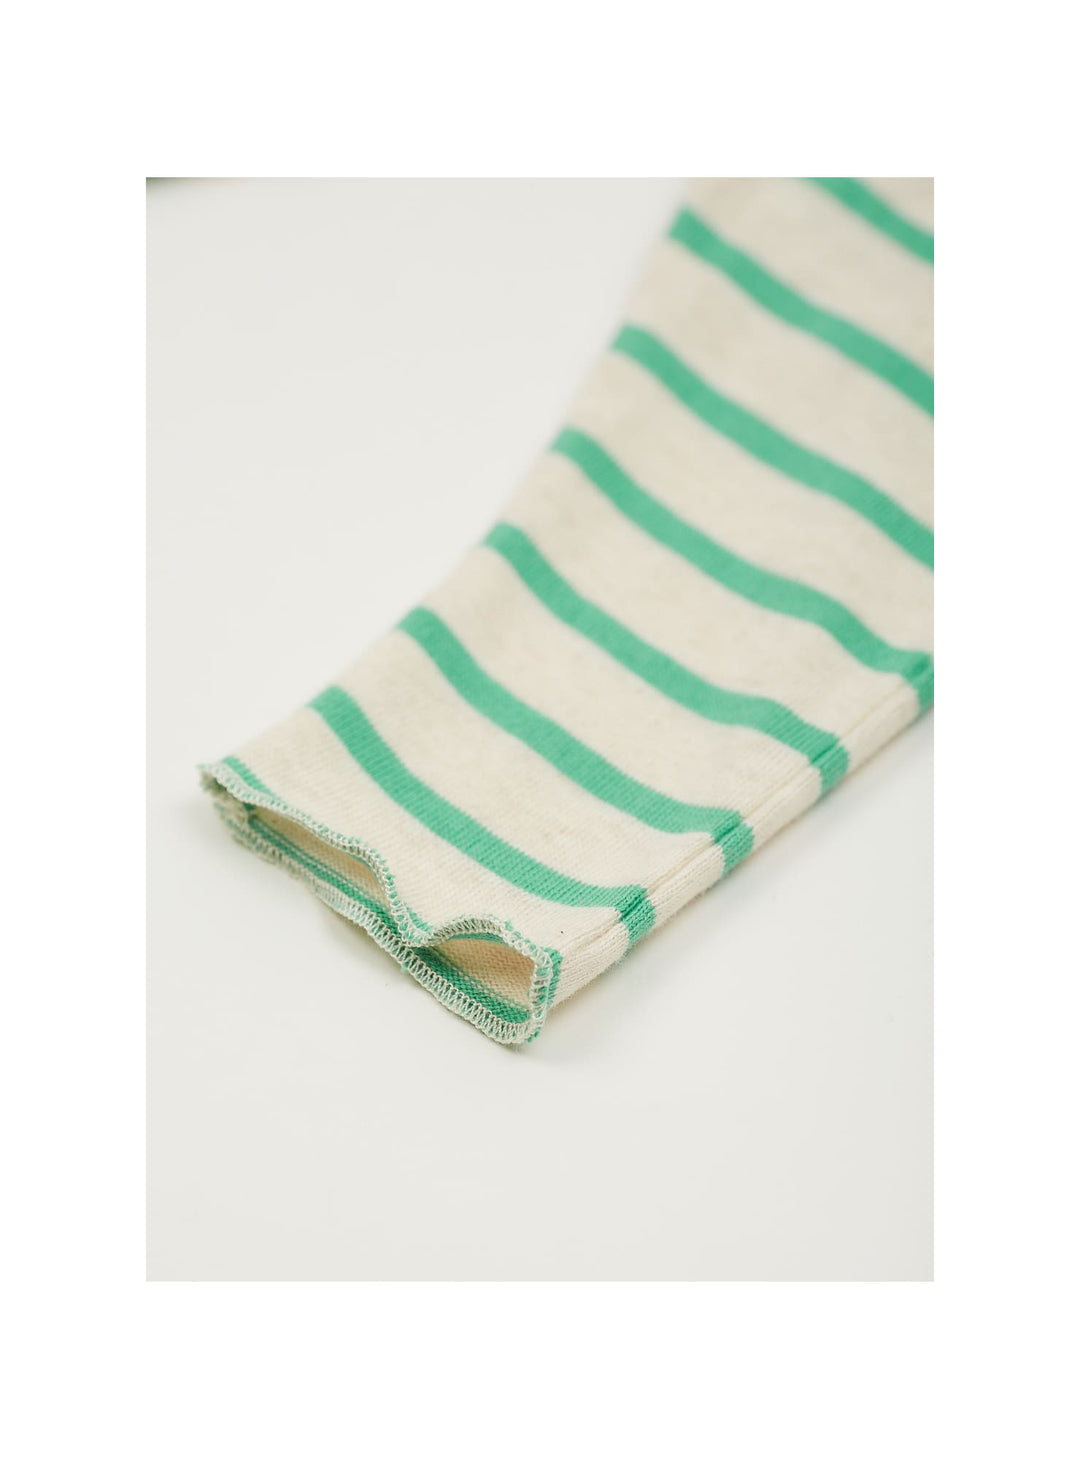 Legging Baby Green Striped- قميص